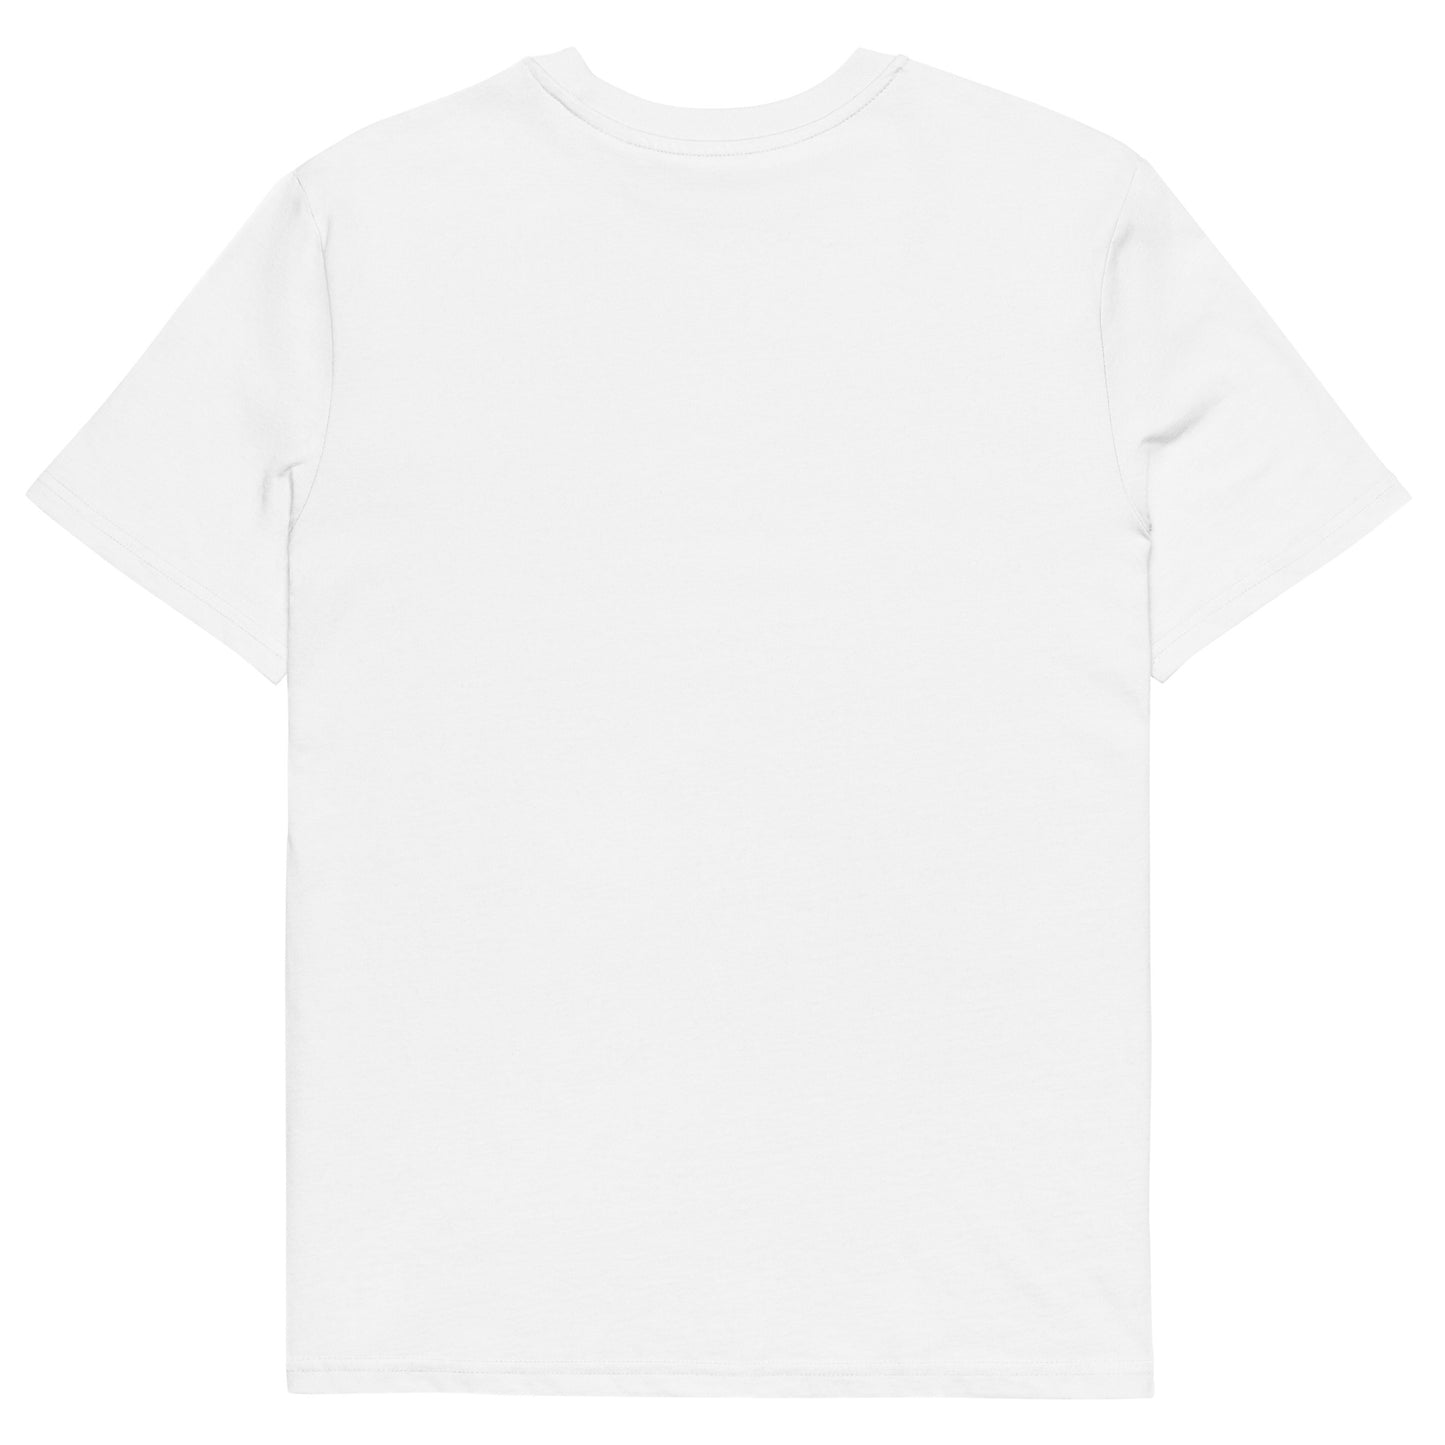 YOU’VE AGED Unisex organic cotton t-shirt